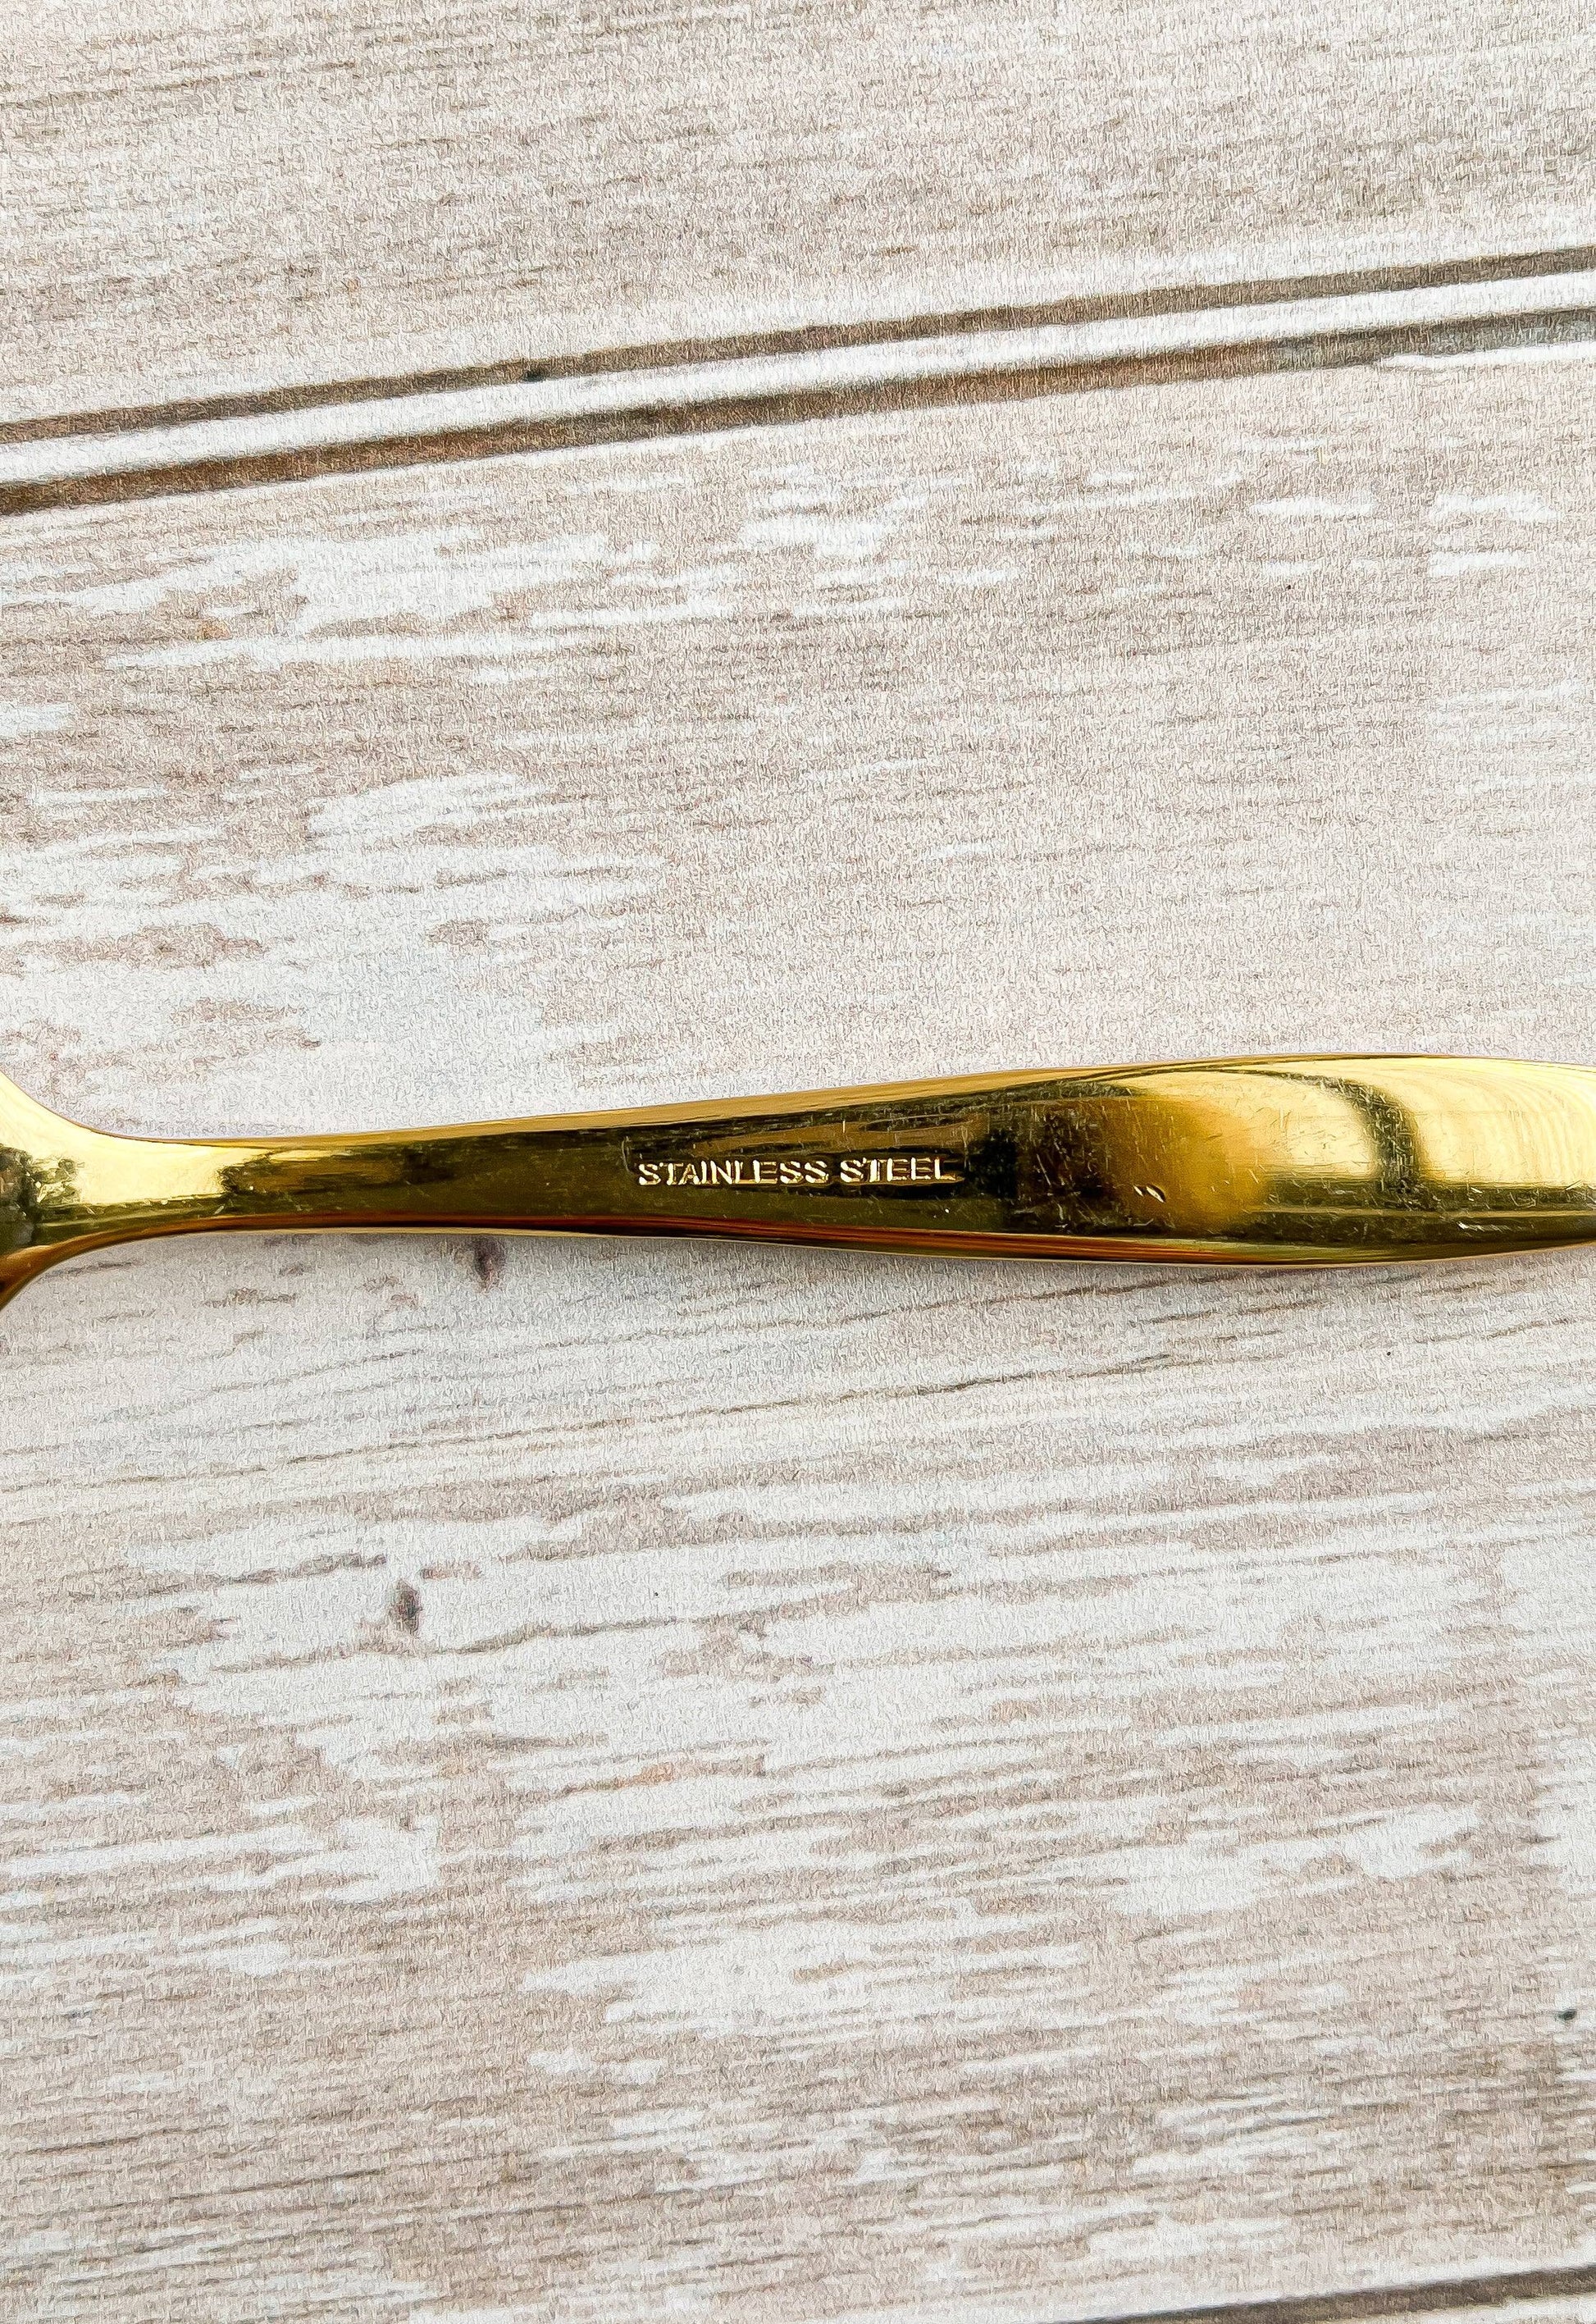 Vintage Gold-Plated Stainless Steel Teaspoon Set of 6 - Sleek Design - SOSC Home